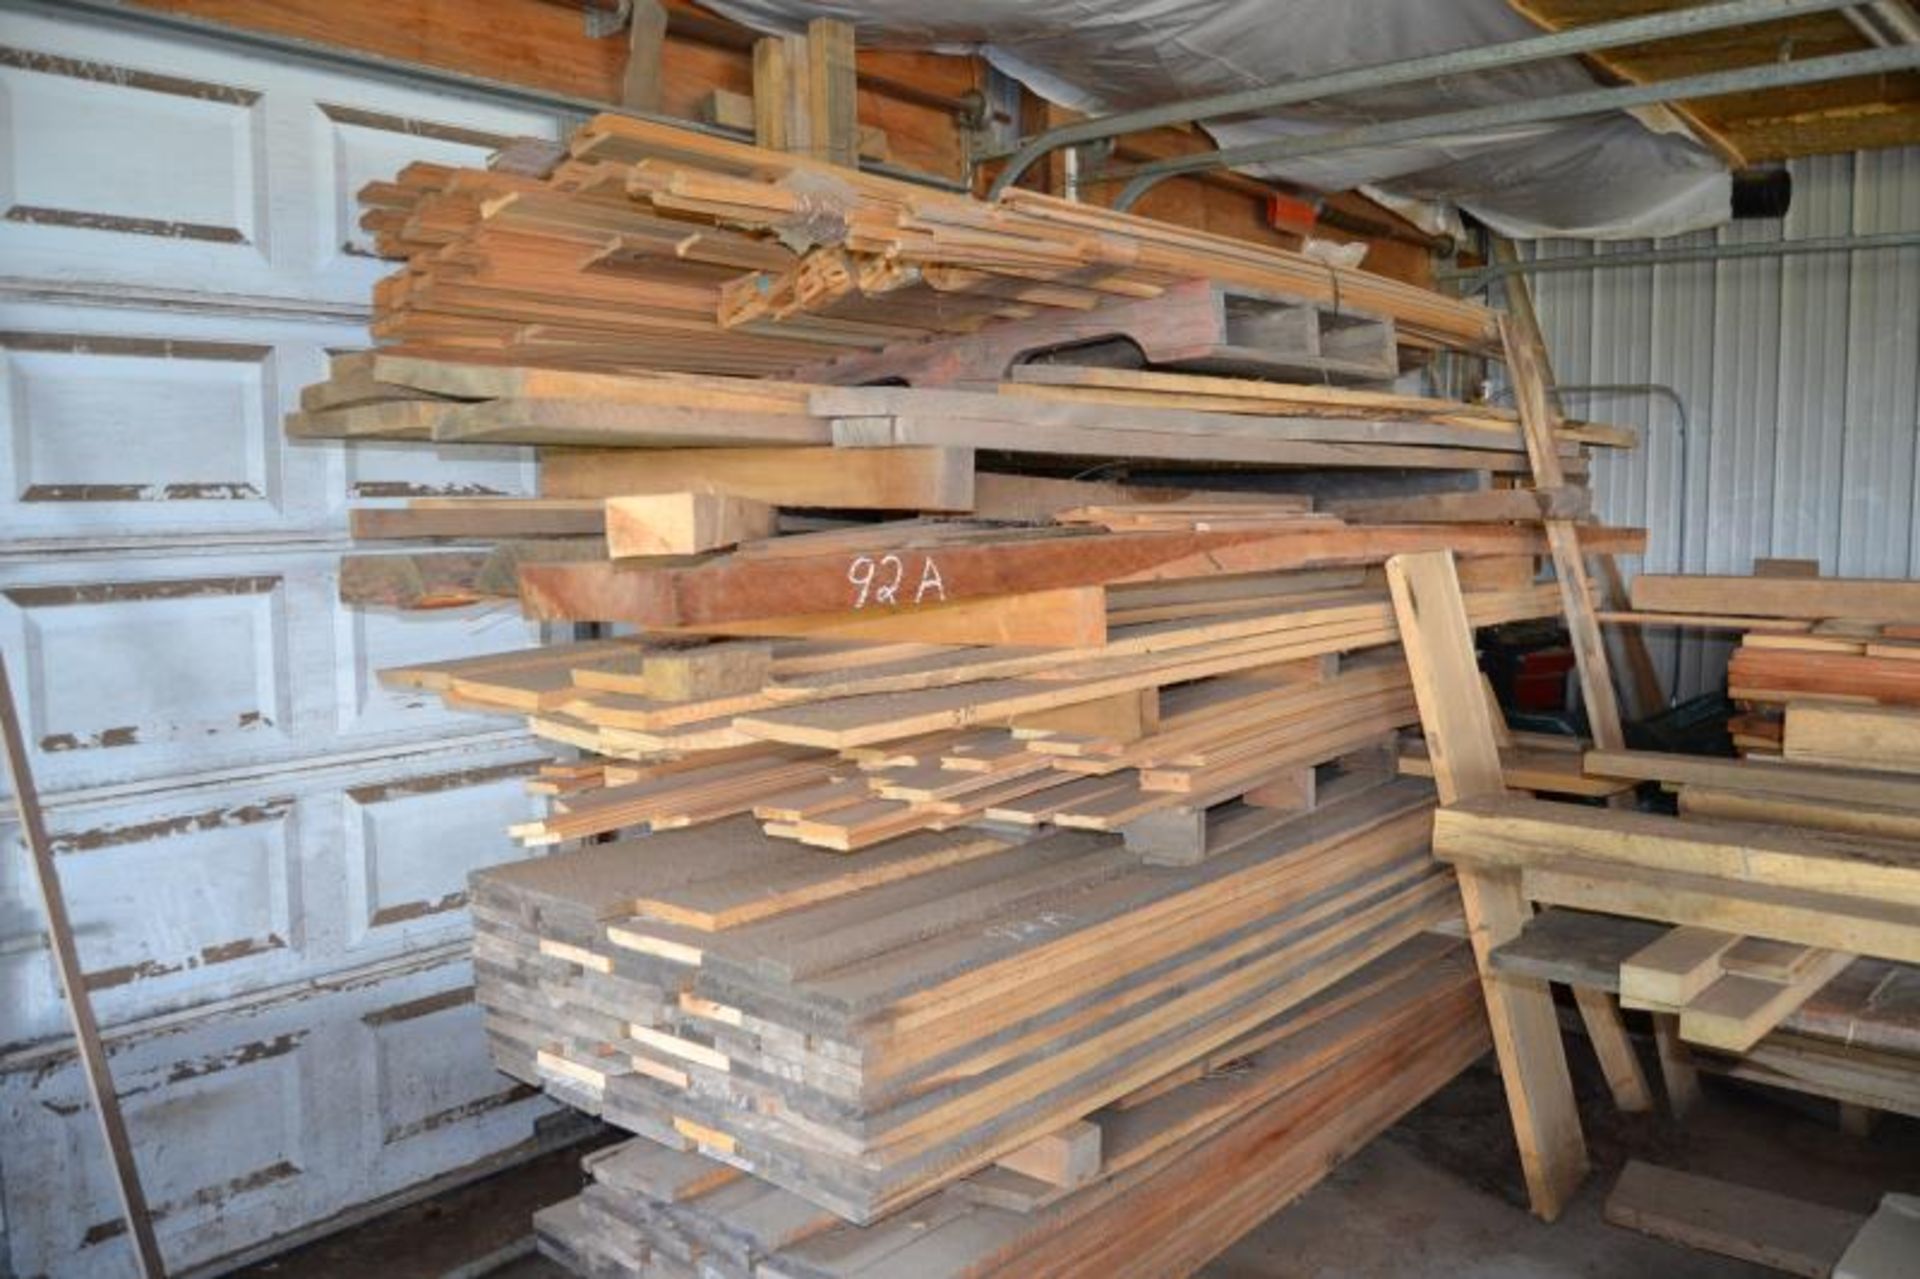 Lot Of Lumber - Image 2 of 2